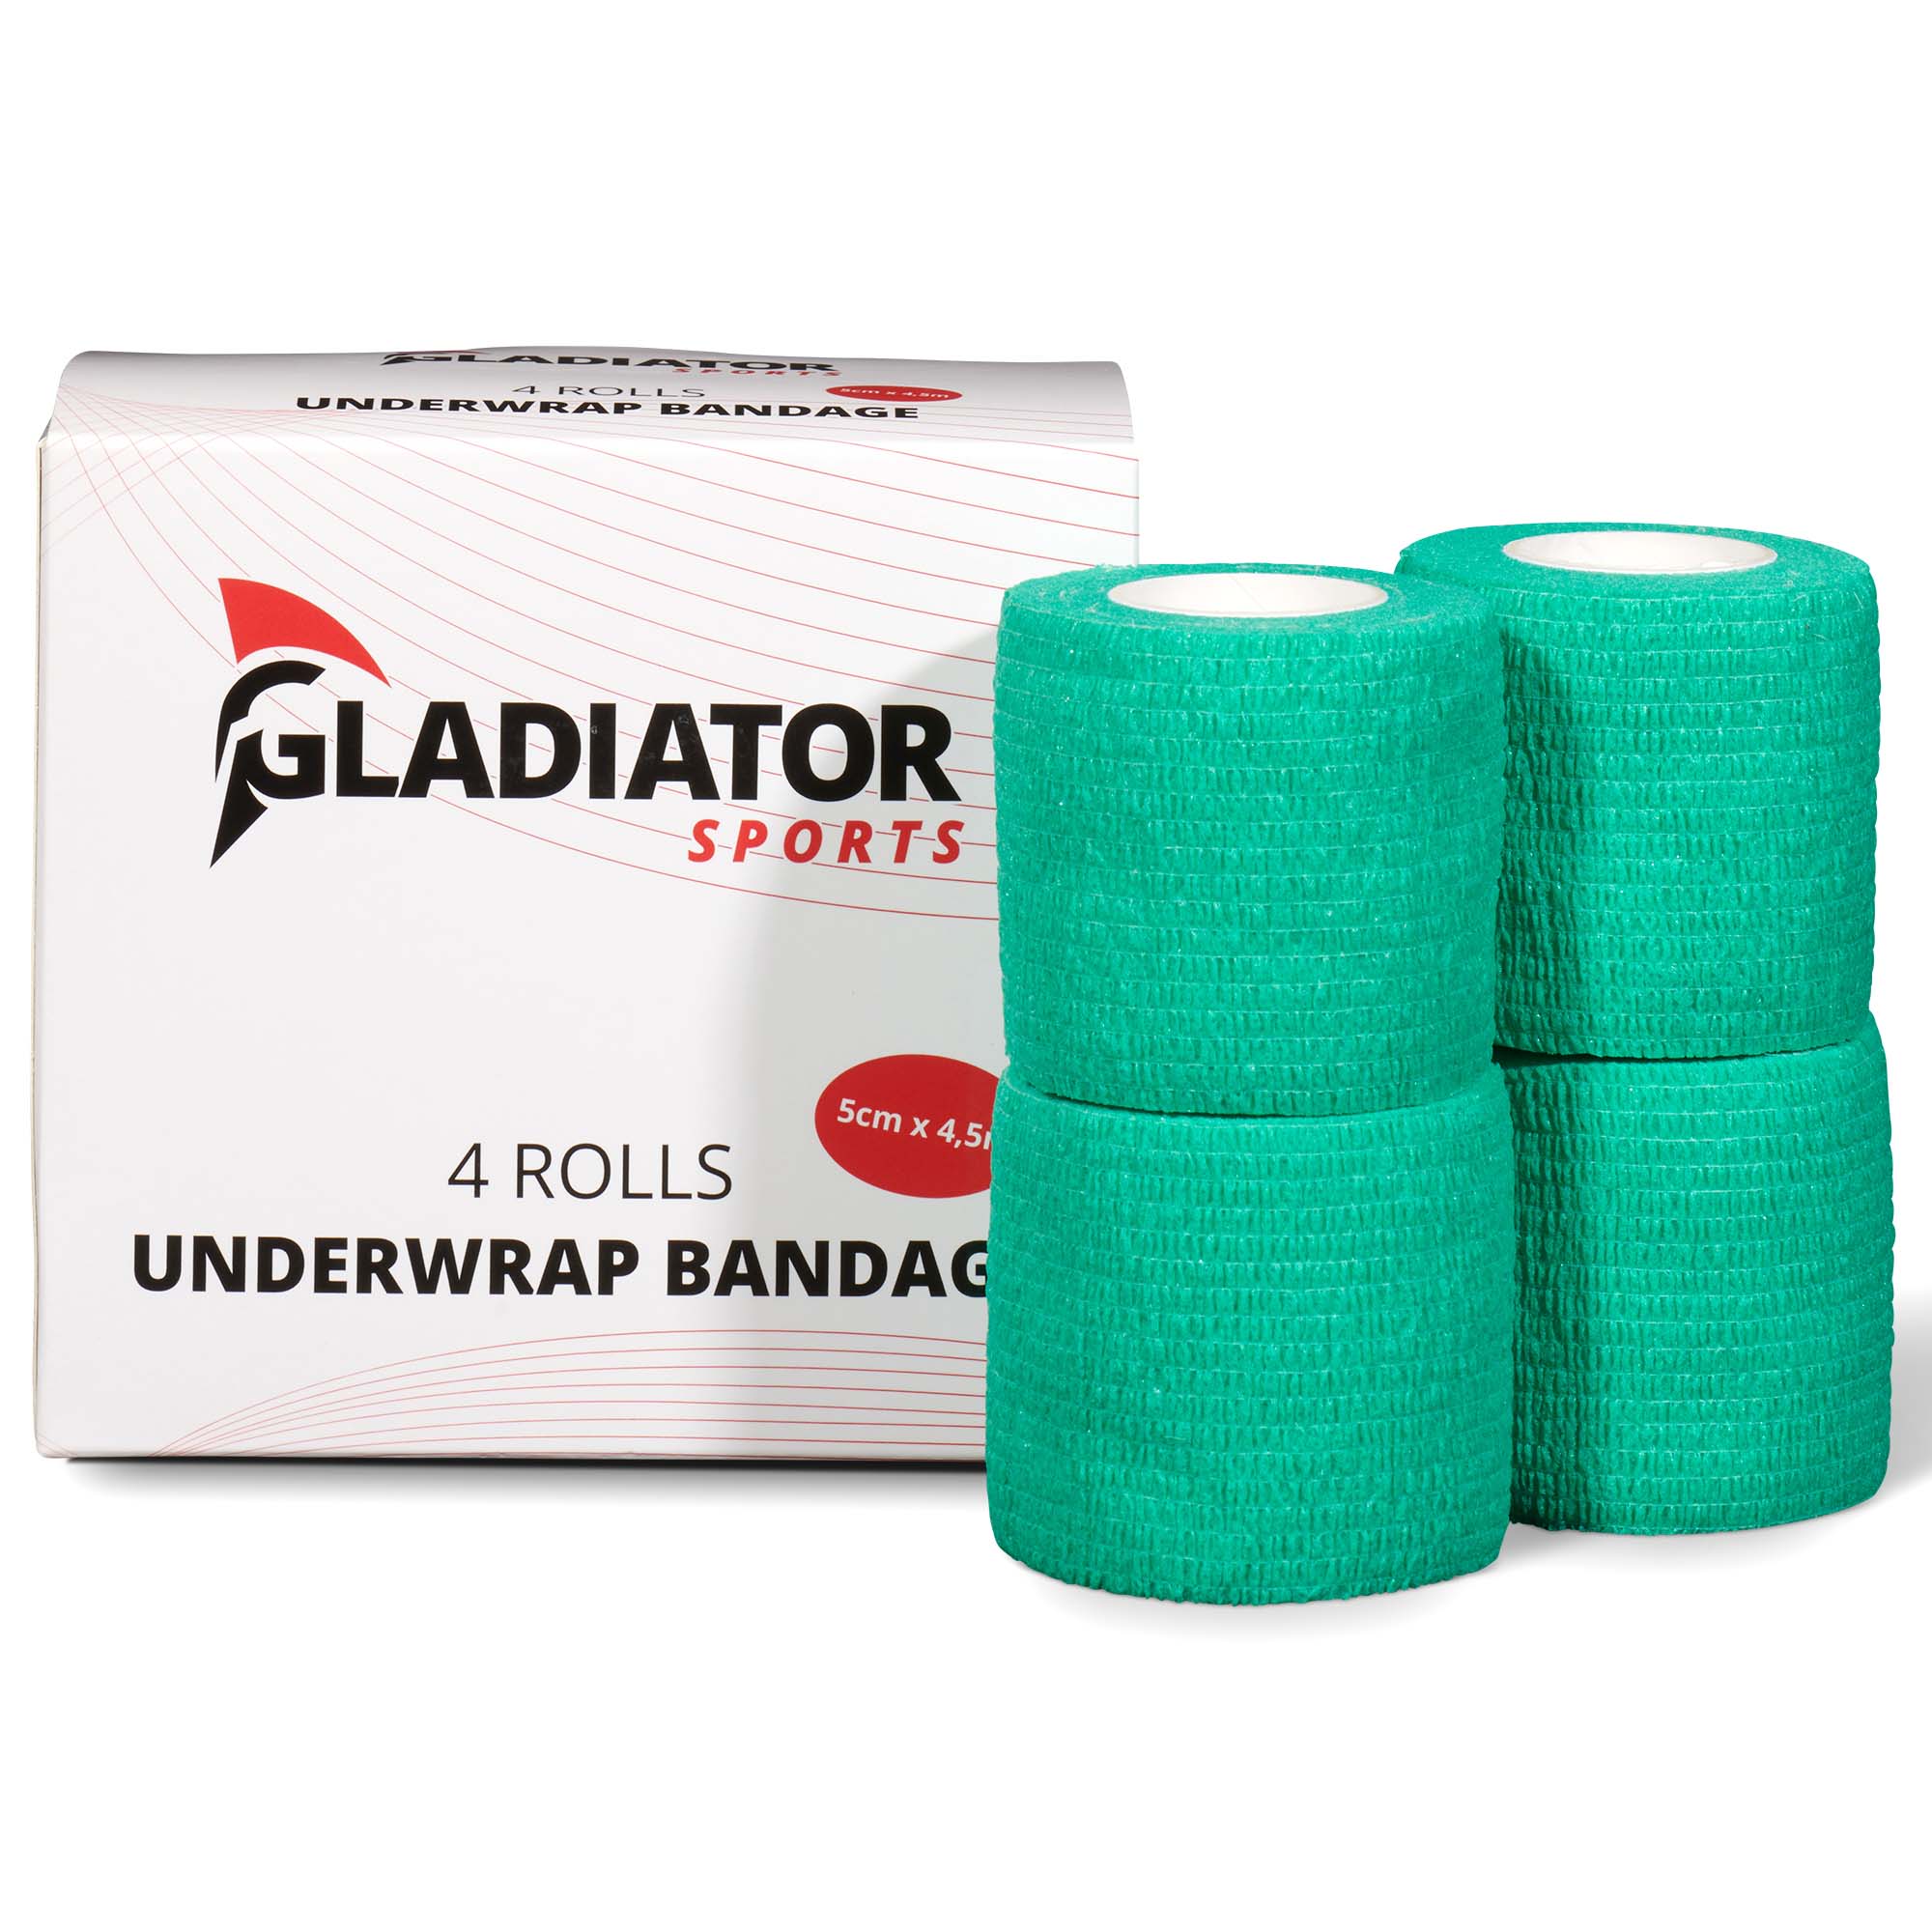 Gladiator Sports underwrap bandage per 4 rolls green with box